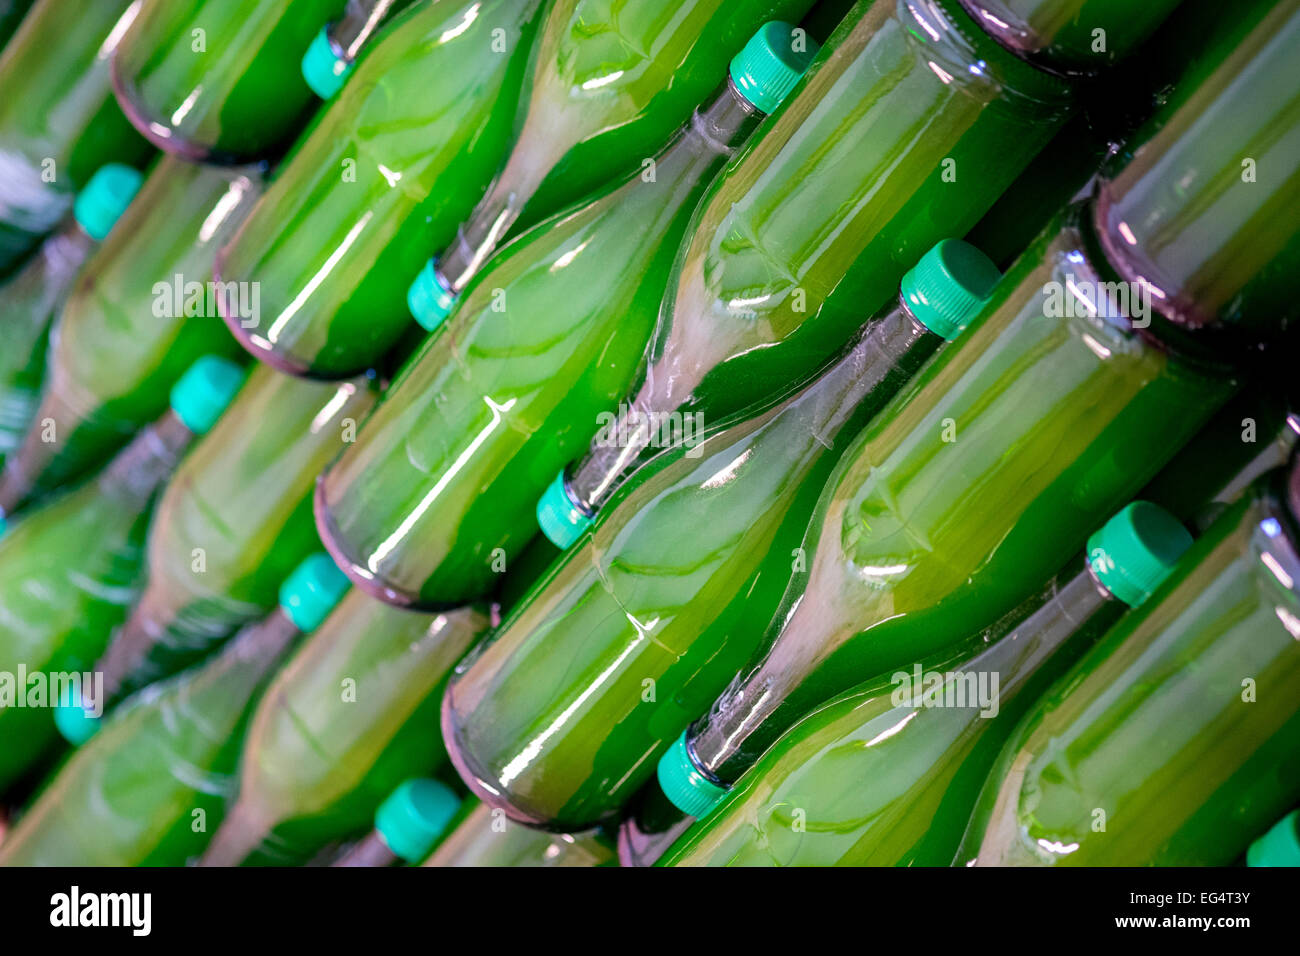 Diagonal rows of green glass bottles in bottling plant Stock Photo